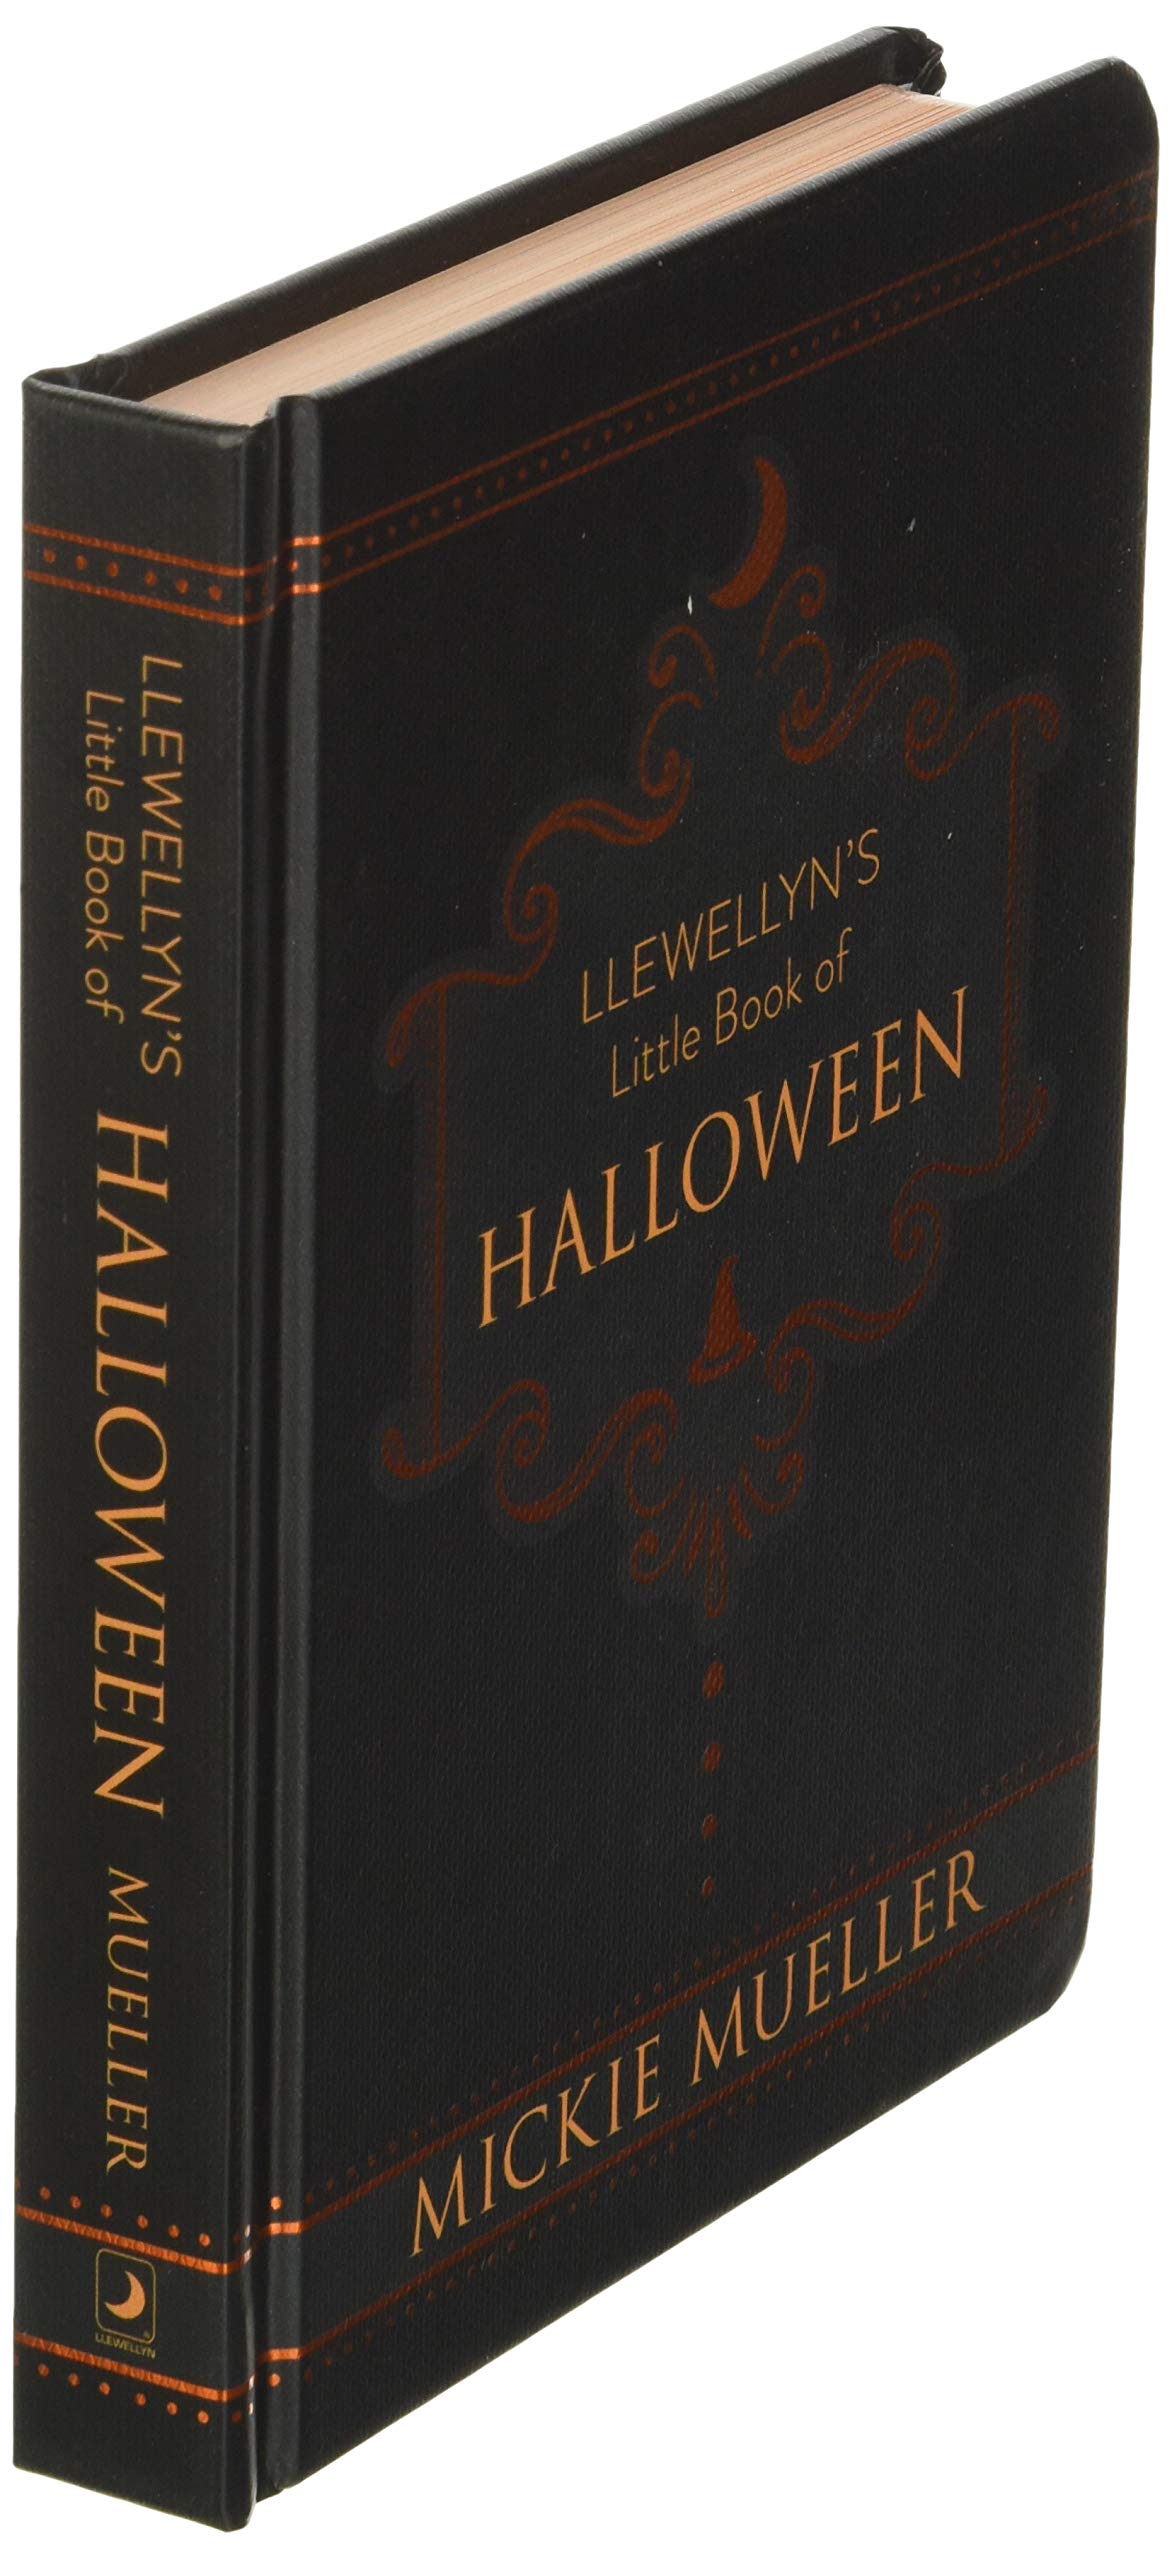 LLEWELLYN'S LITTLE BOOK OF HALLOWEEN - MUELLER, M. - HARDCOVER